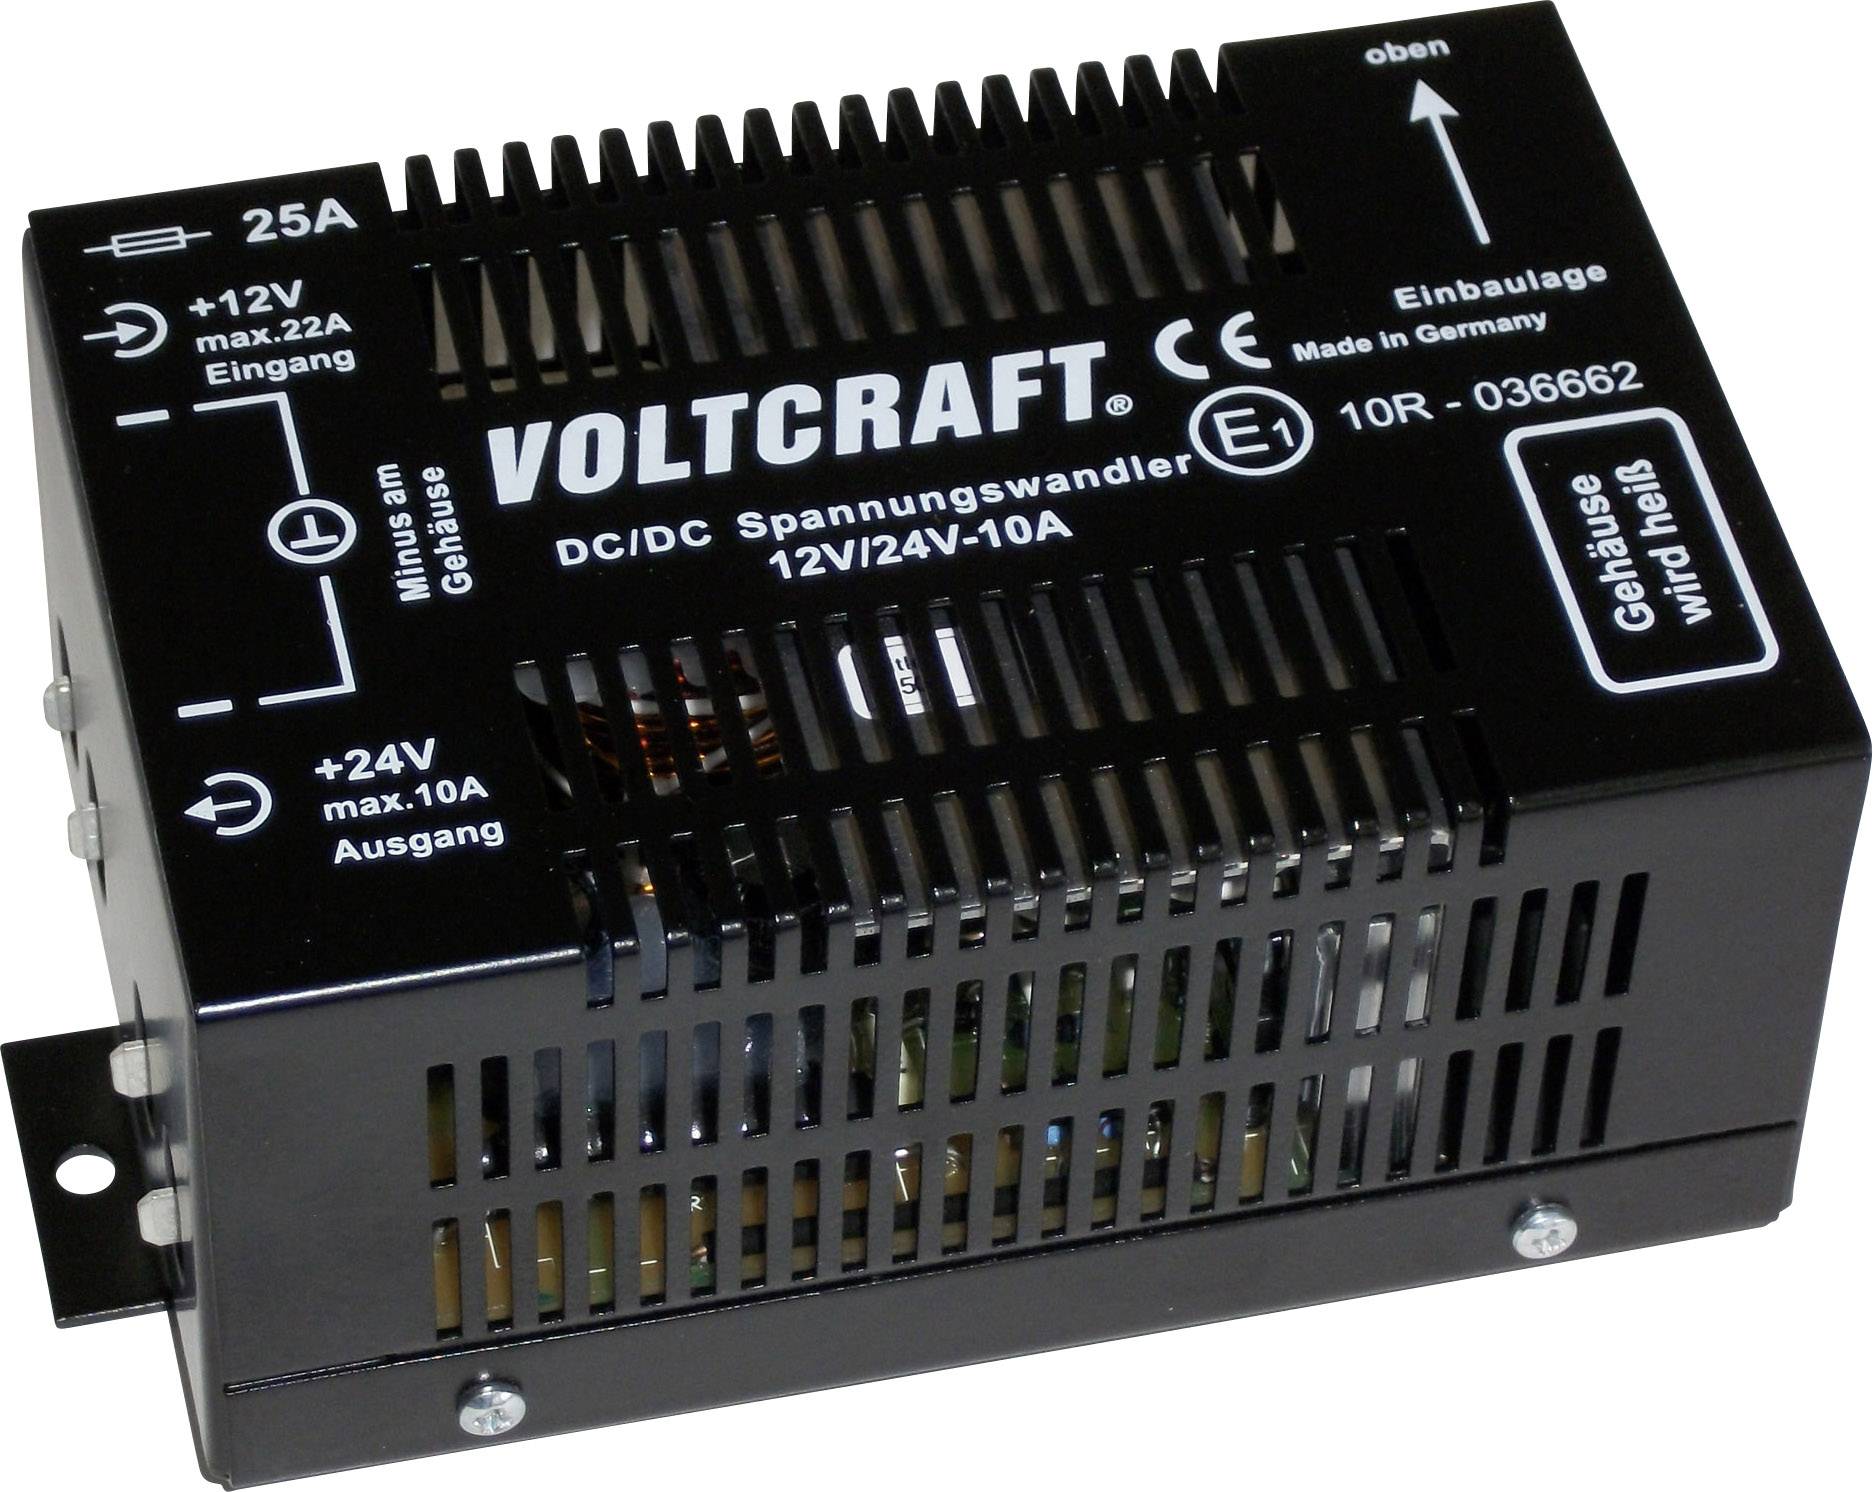 VOLTCRAFT DC/DC converter 12 V to 24 V 240 W